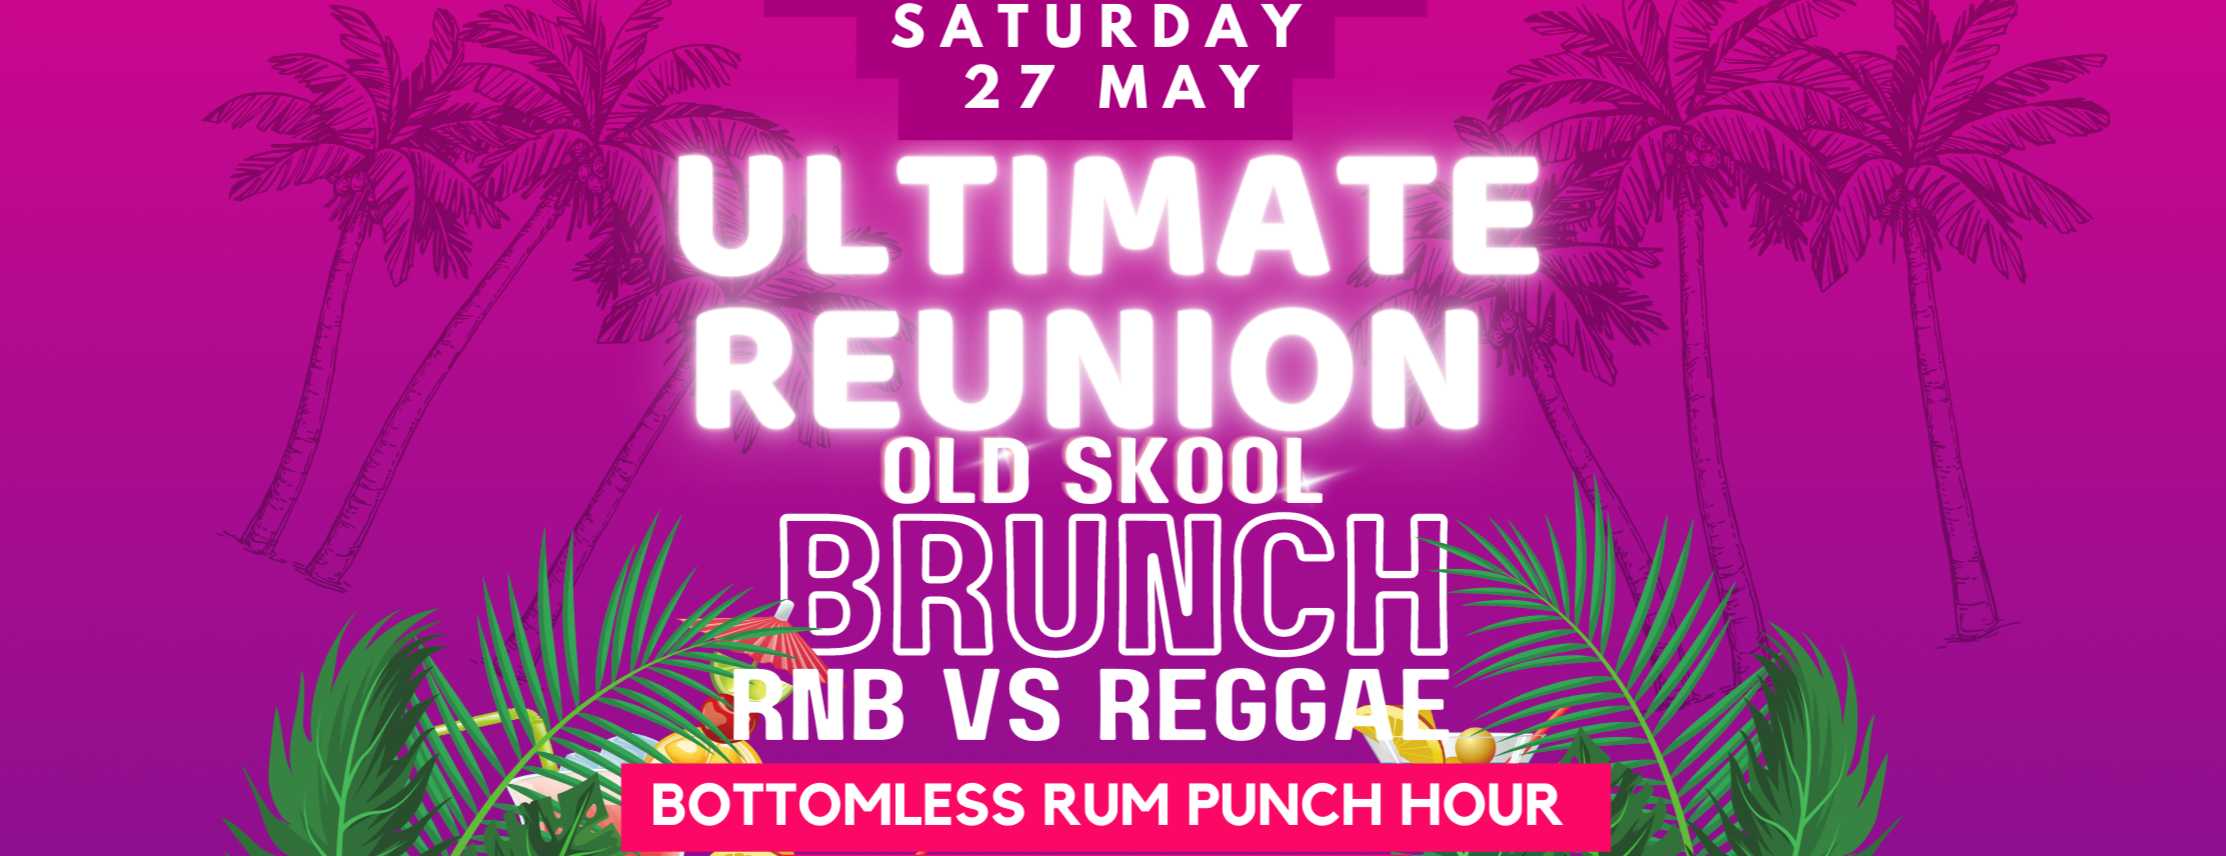 Ultimate Reunion Old Skool Brunch RnB vs Dancehall @ Network Sheffield